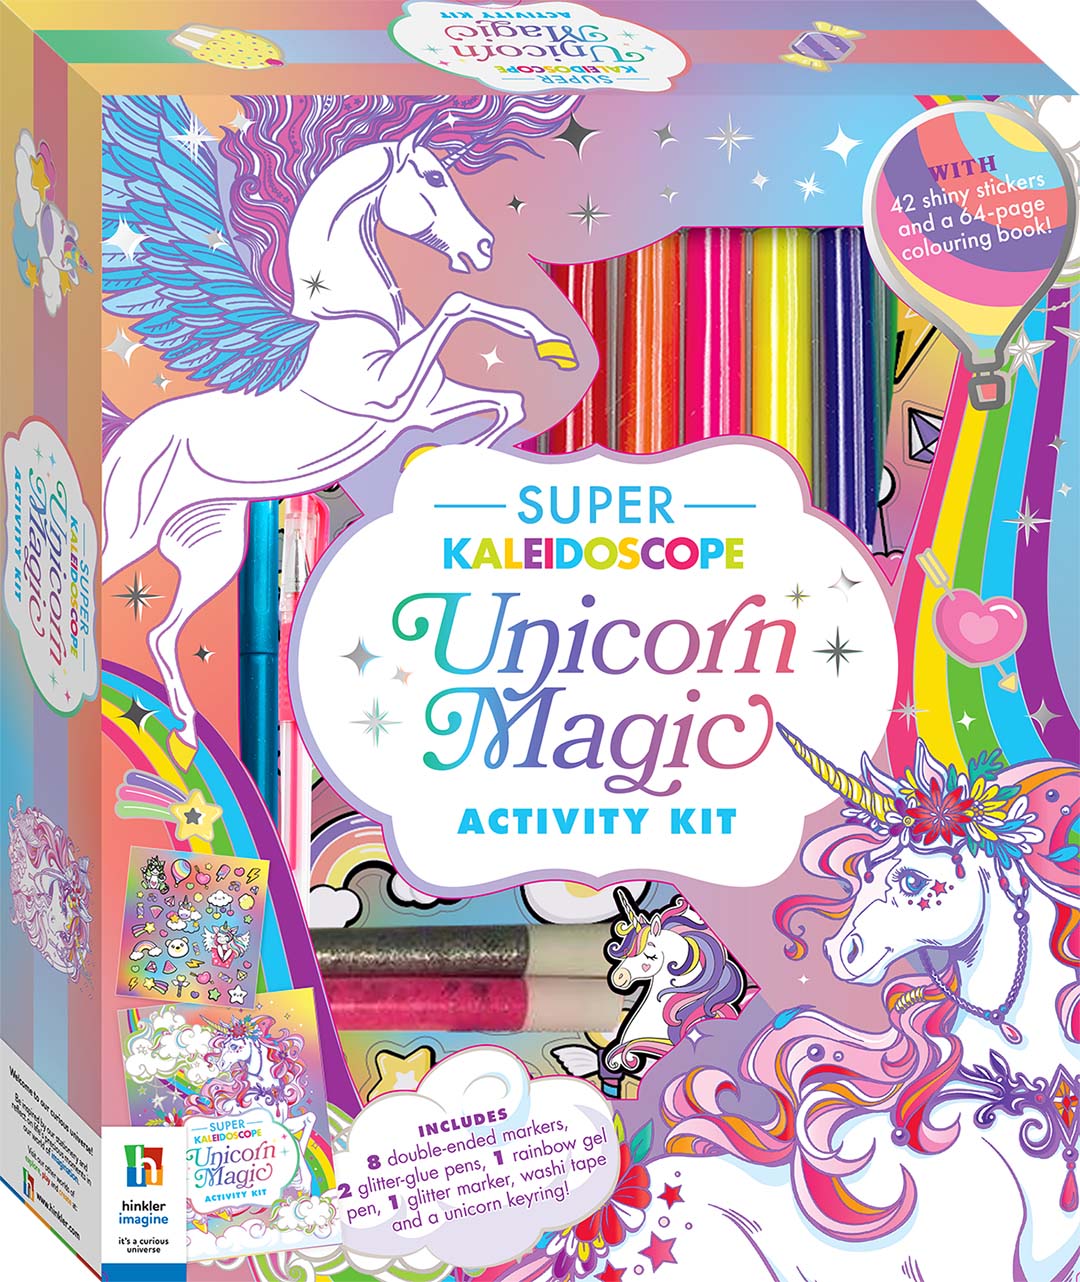 Super Kaleidoscope: Unicorn Magic Activity Kit